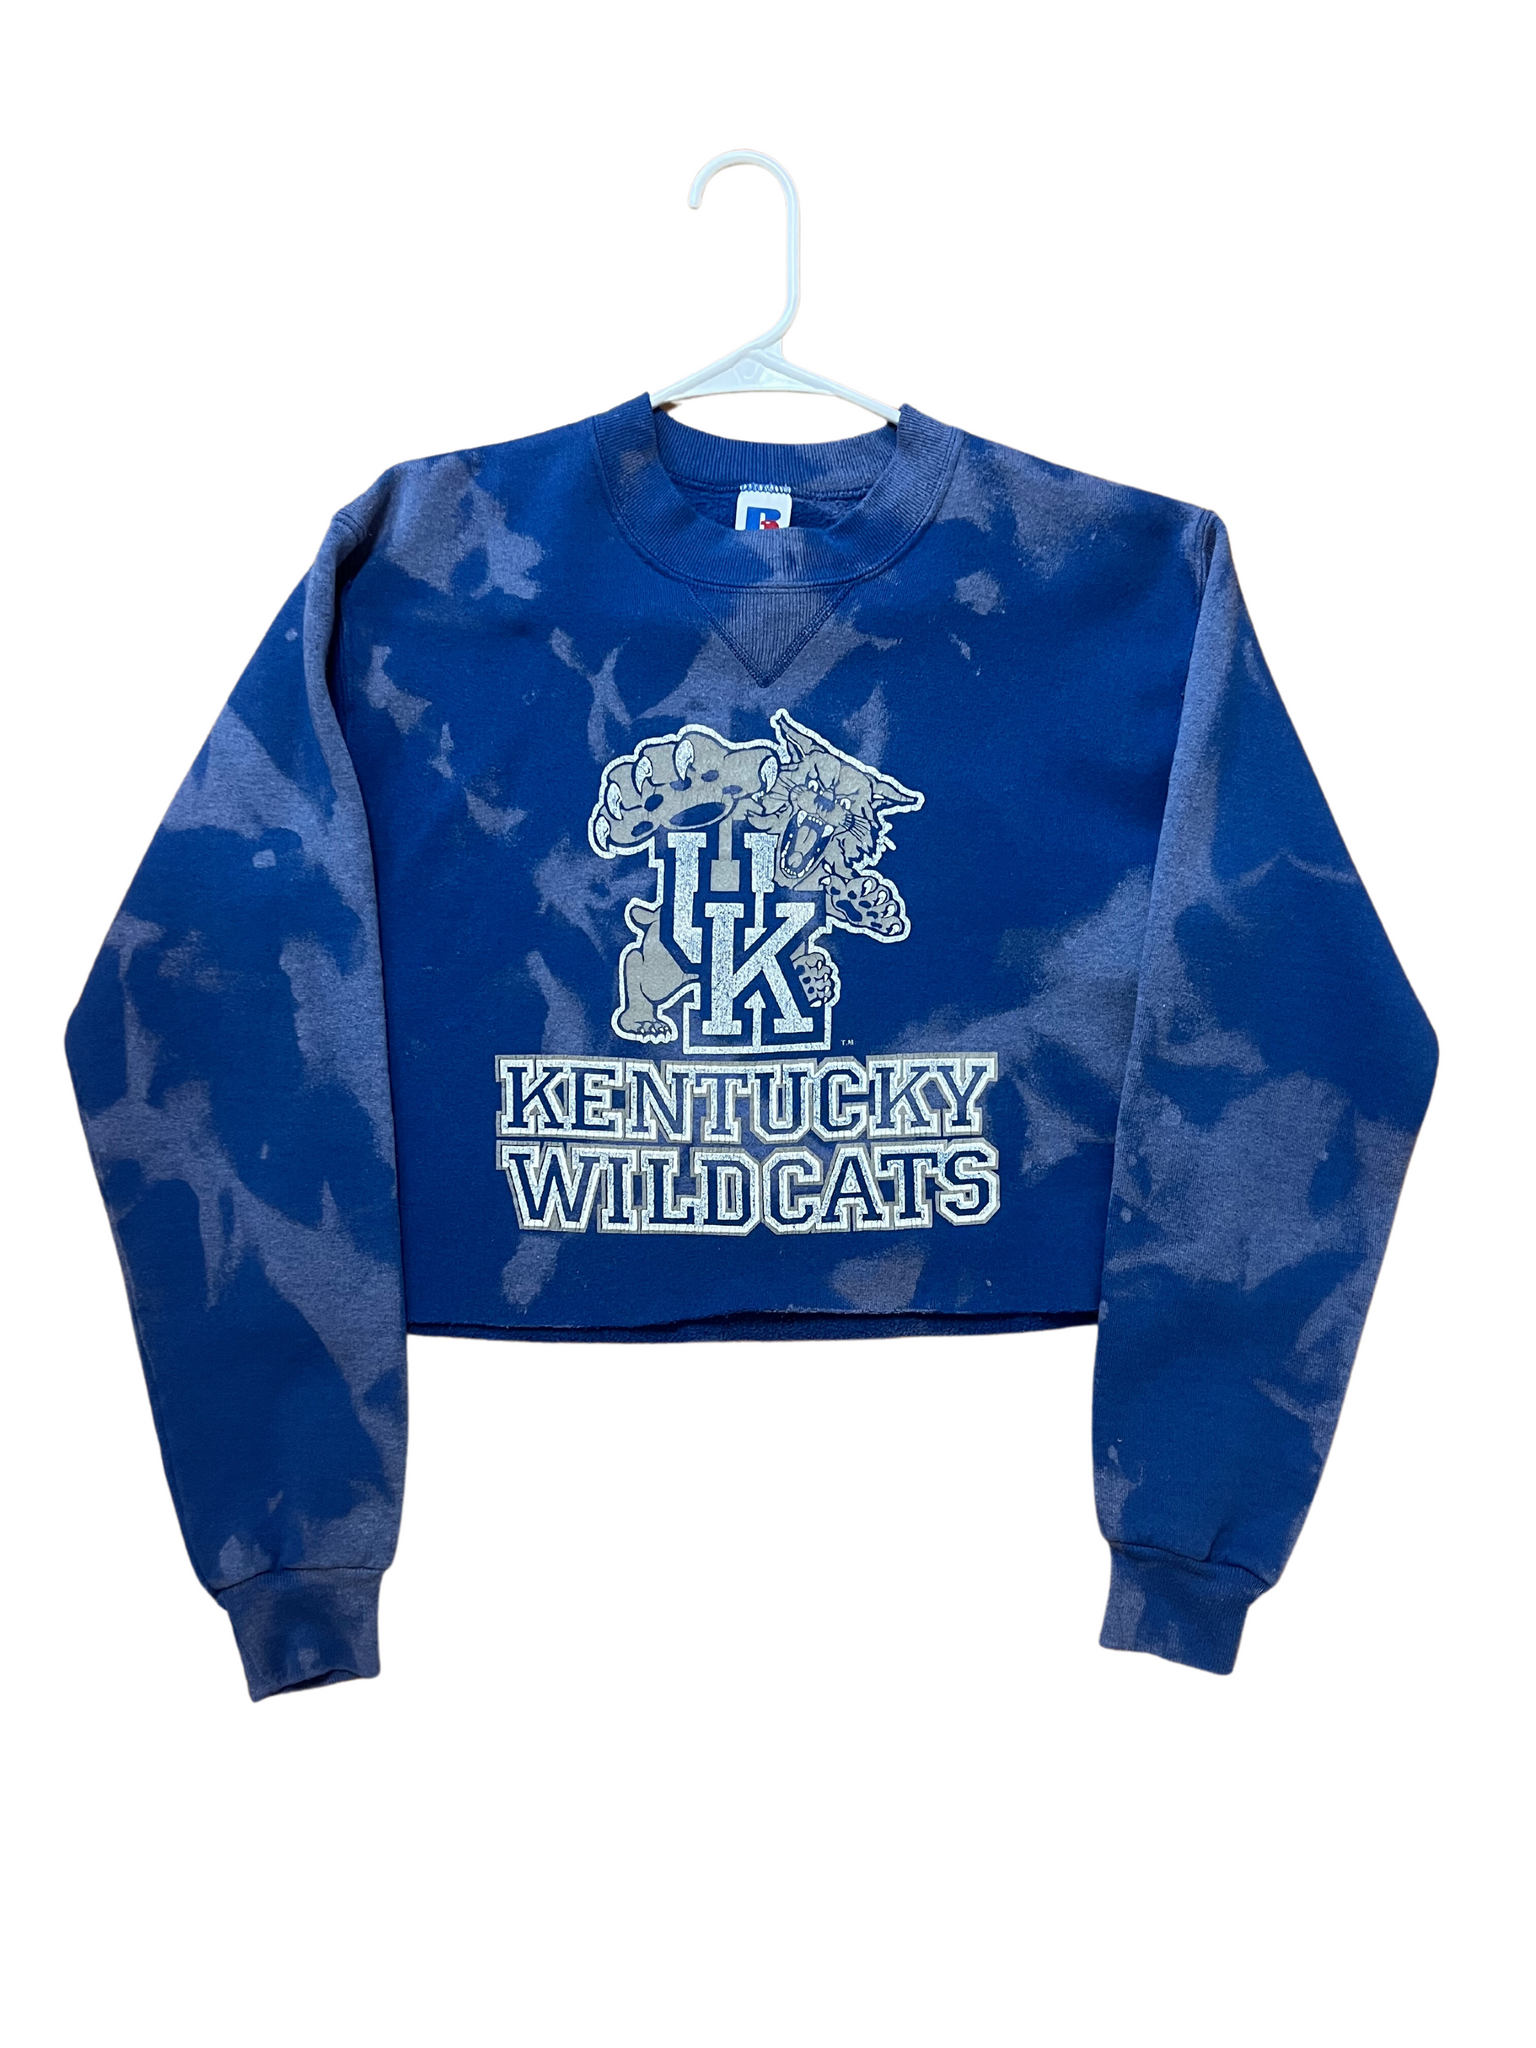 Vintage University of Kentucky Cropped & Bleached Sweatshirt